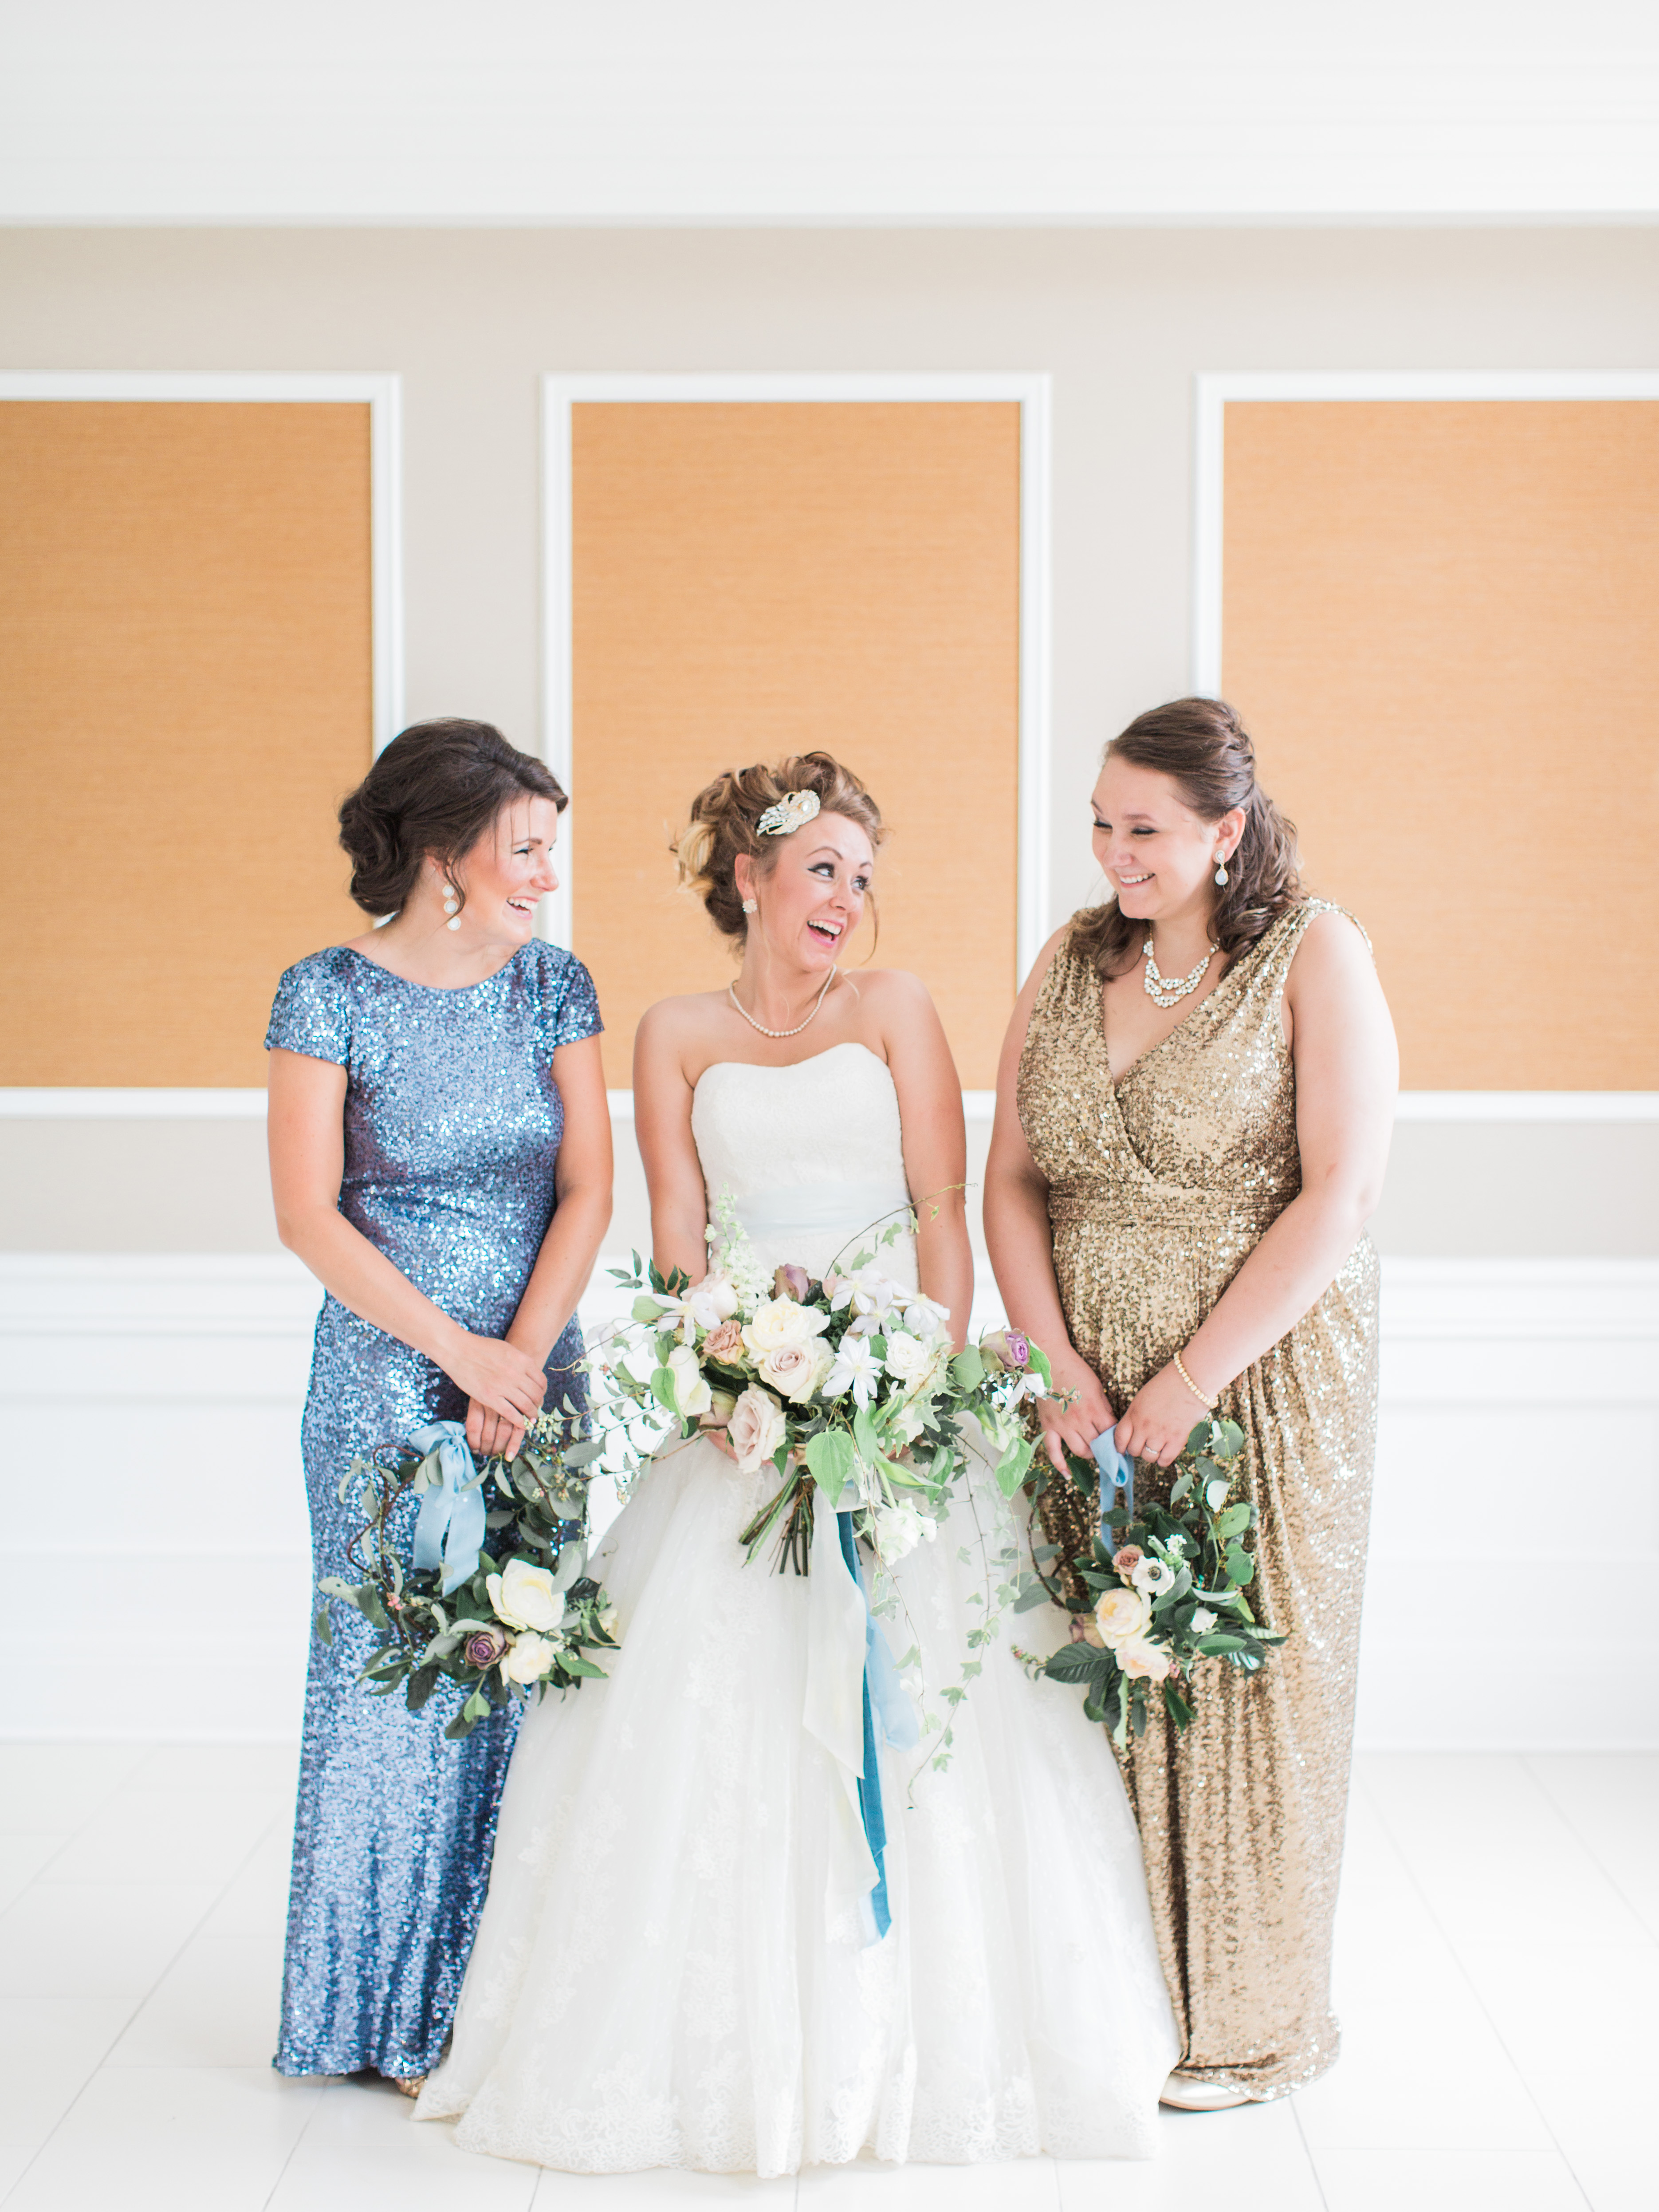 Sequin Bridesmaids Dress | The Day's Design | Samantha James Photography